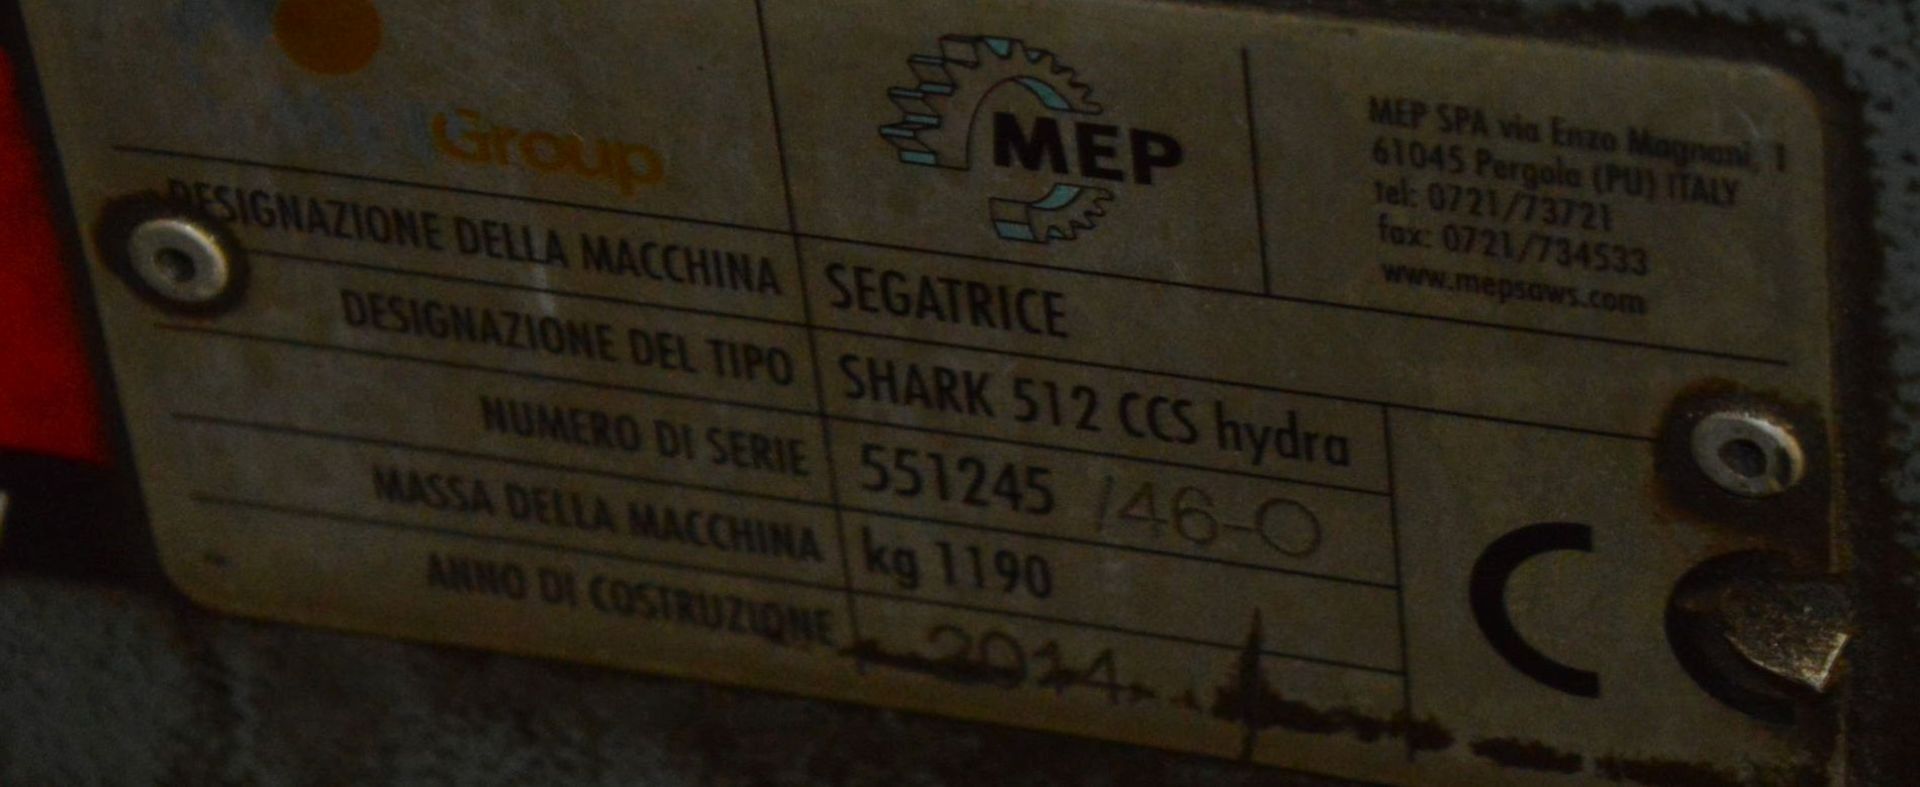 MEP SHARK 512CCS HYDRA HORIZONTAL BAND SAW, serial no. 551245/46-0, year of manufacture 2014, - Bild 7 aus 7